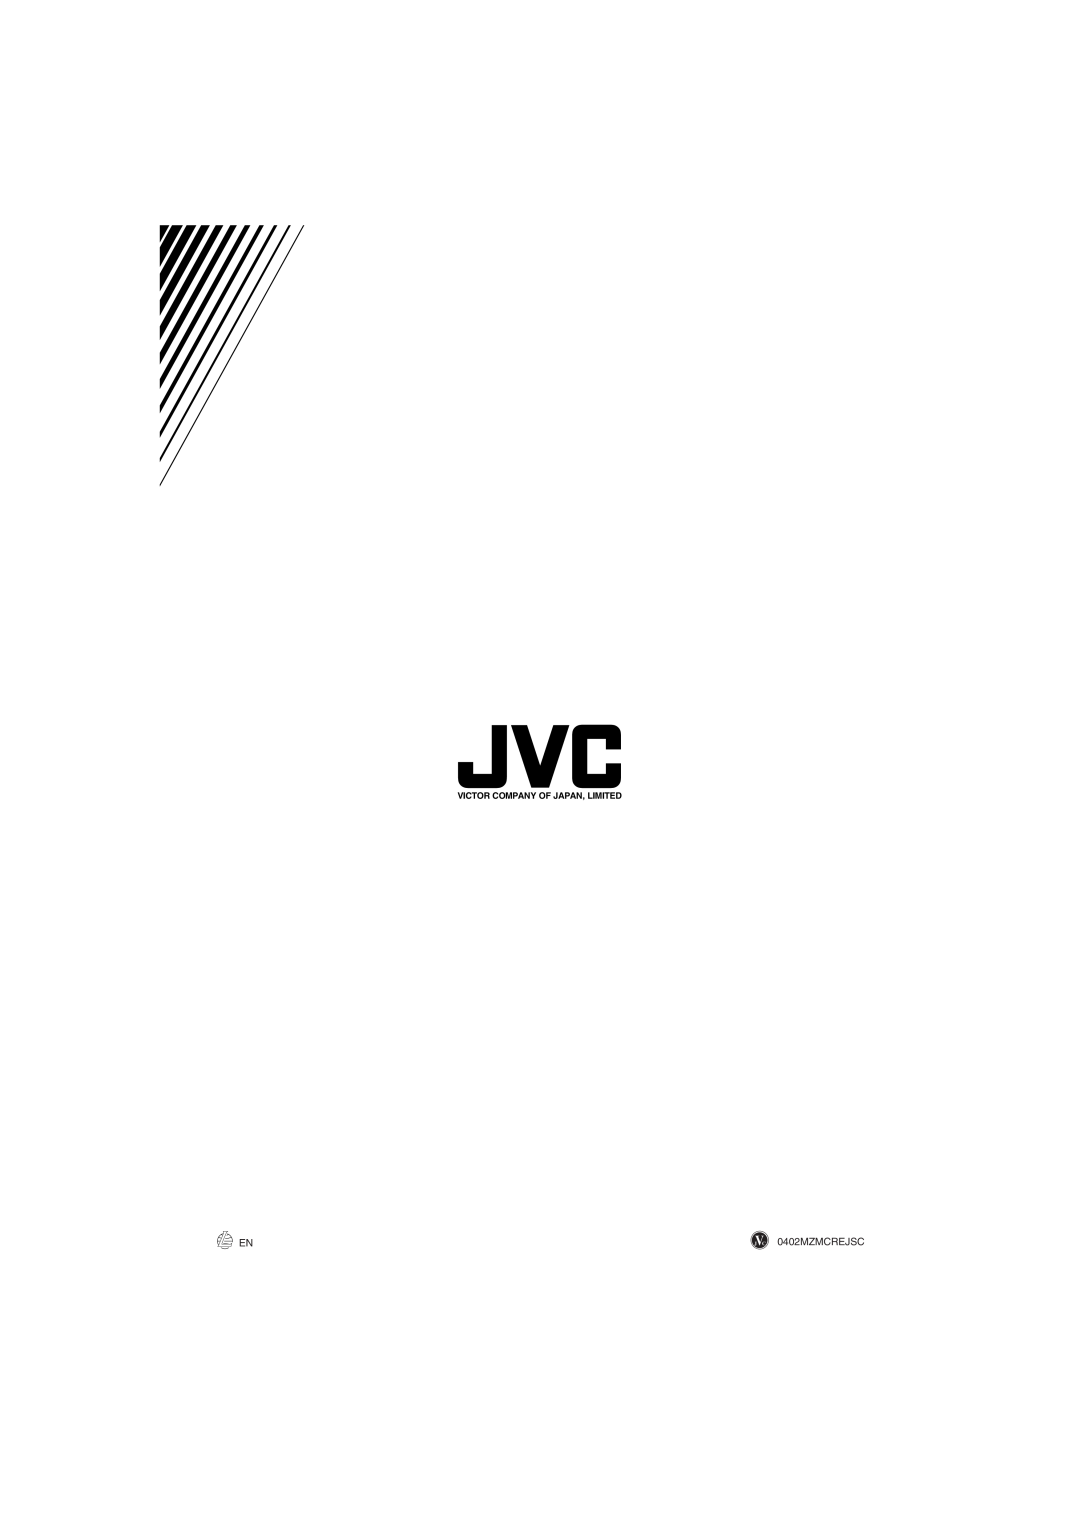 JVC GNT0013-014A manual JVC 0402MZMCREJSC, Victor Company Of Japan, Limited 